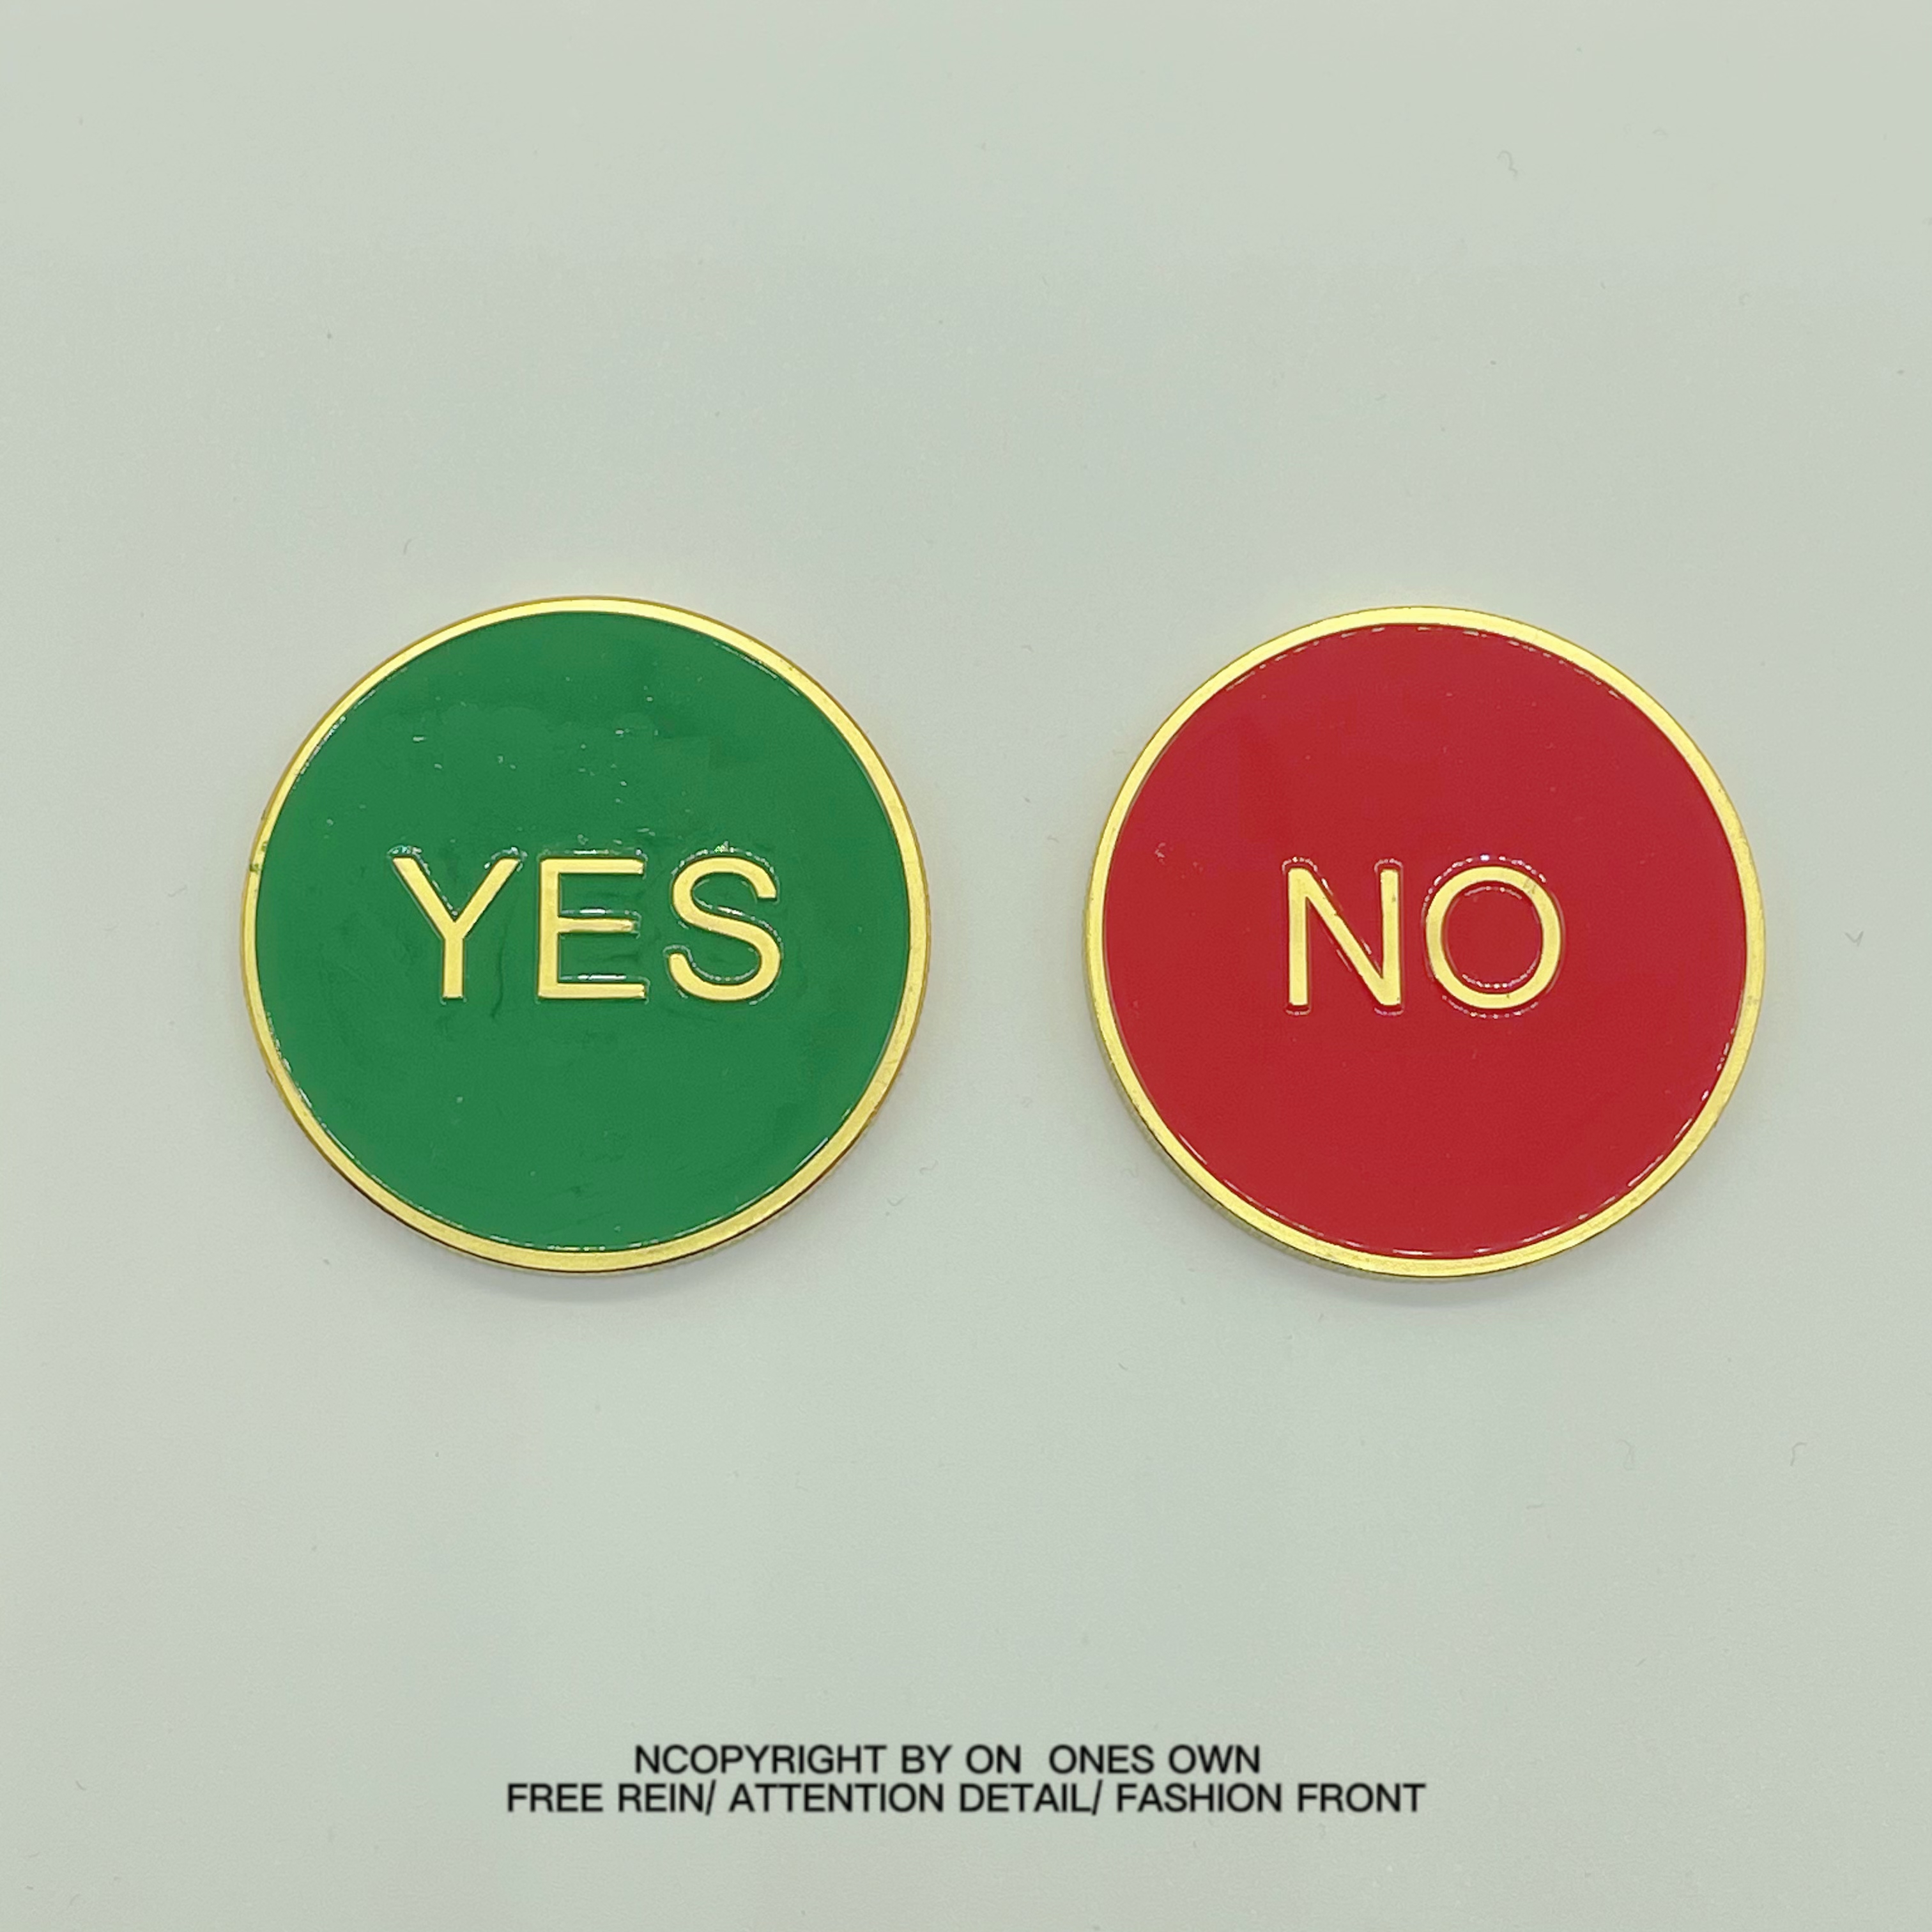 “YES/NO决策币”一个有趣的小玩意无聊了就玩玩这个好运气幸运币